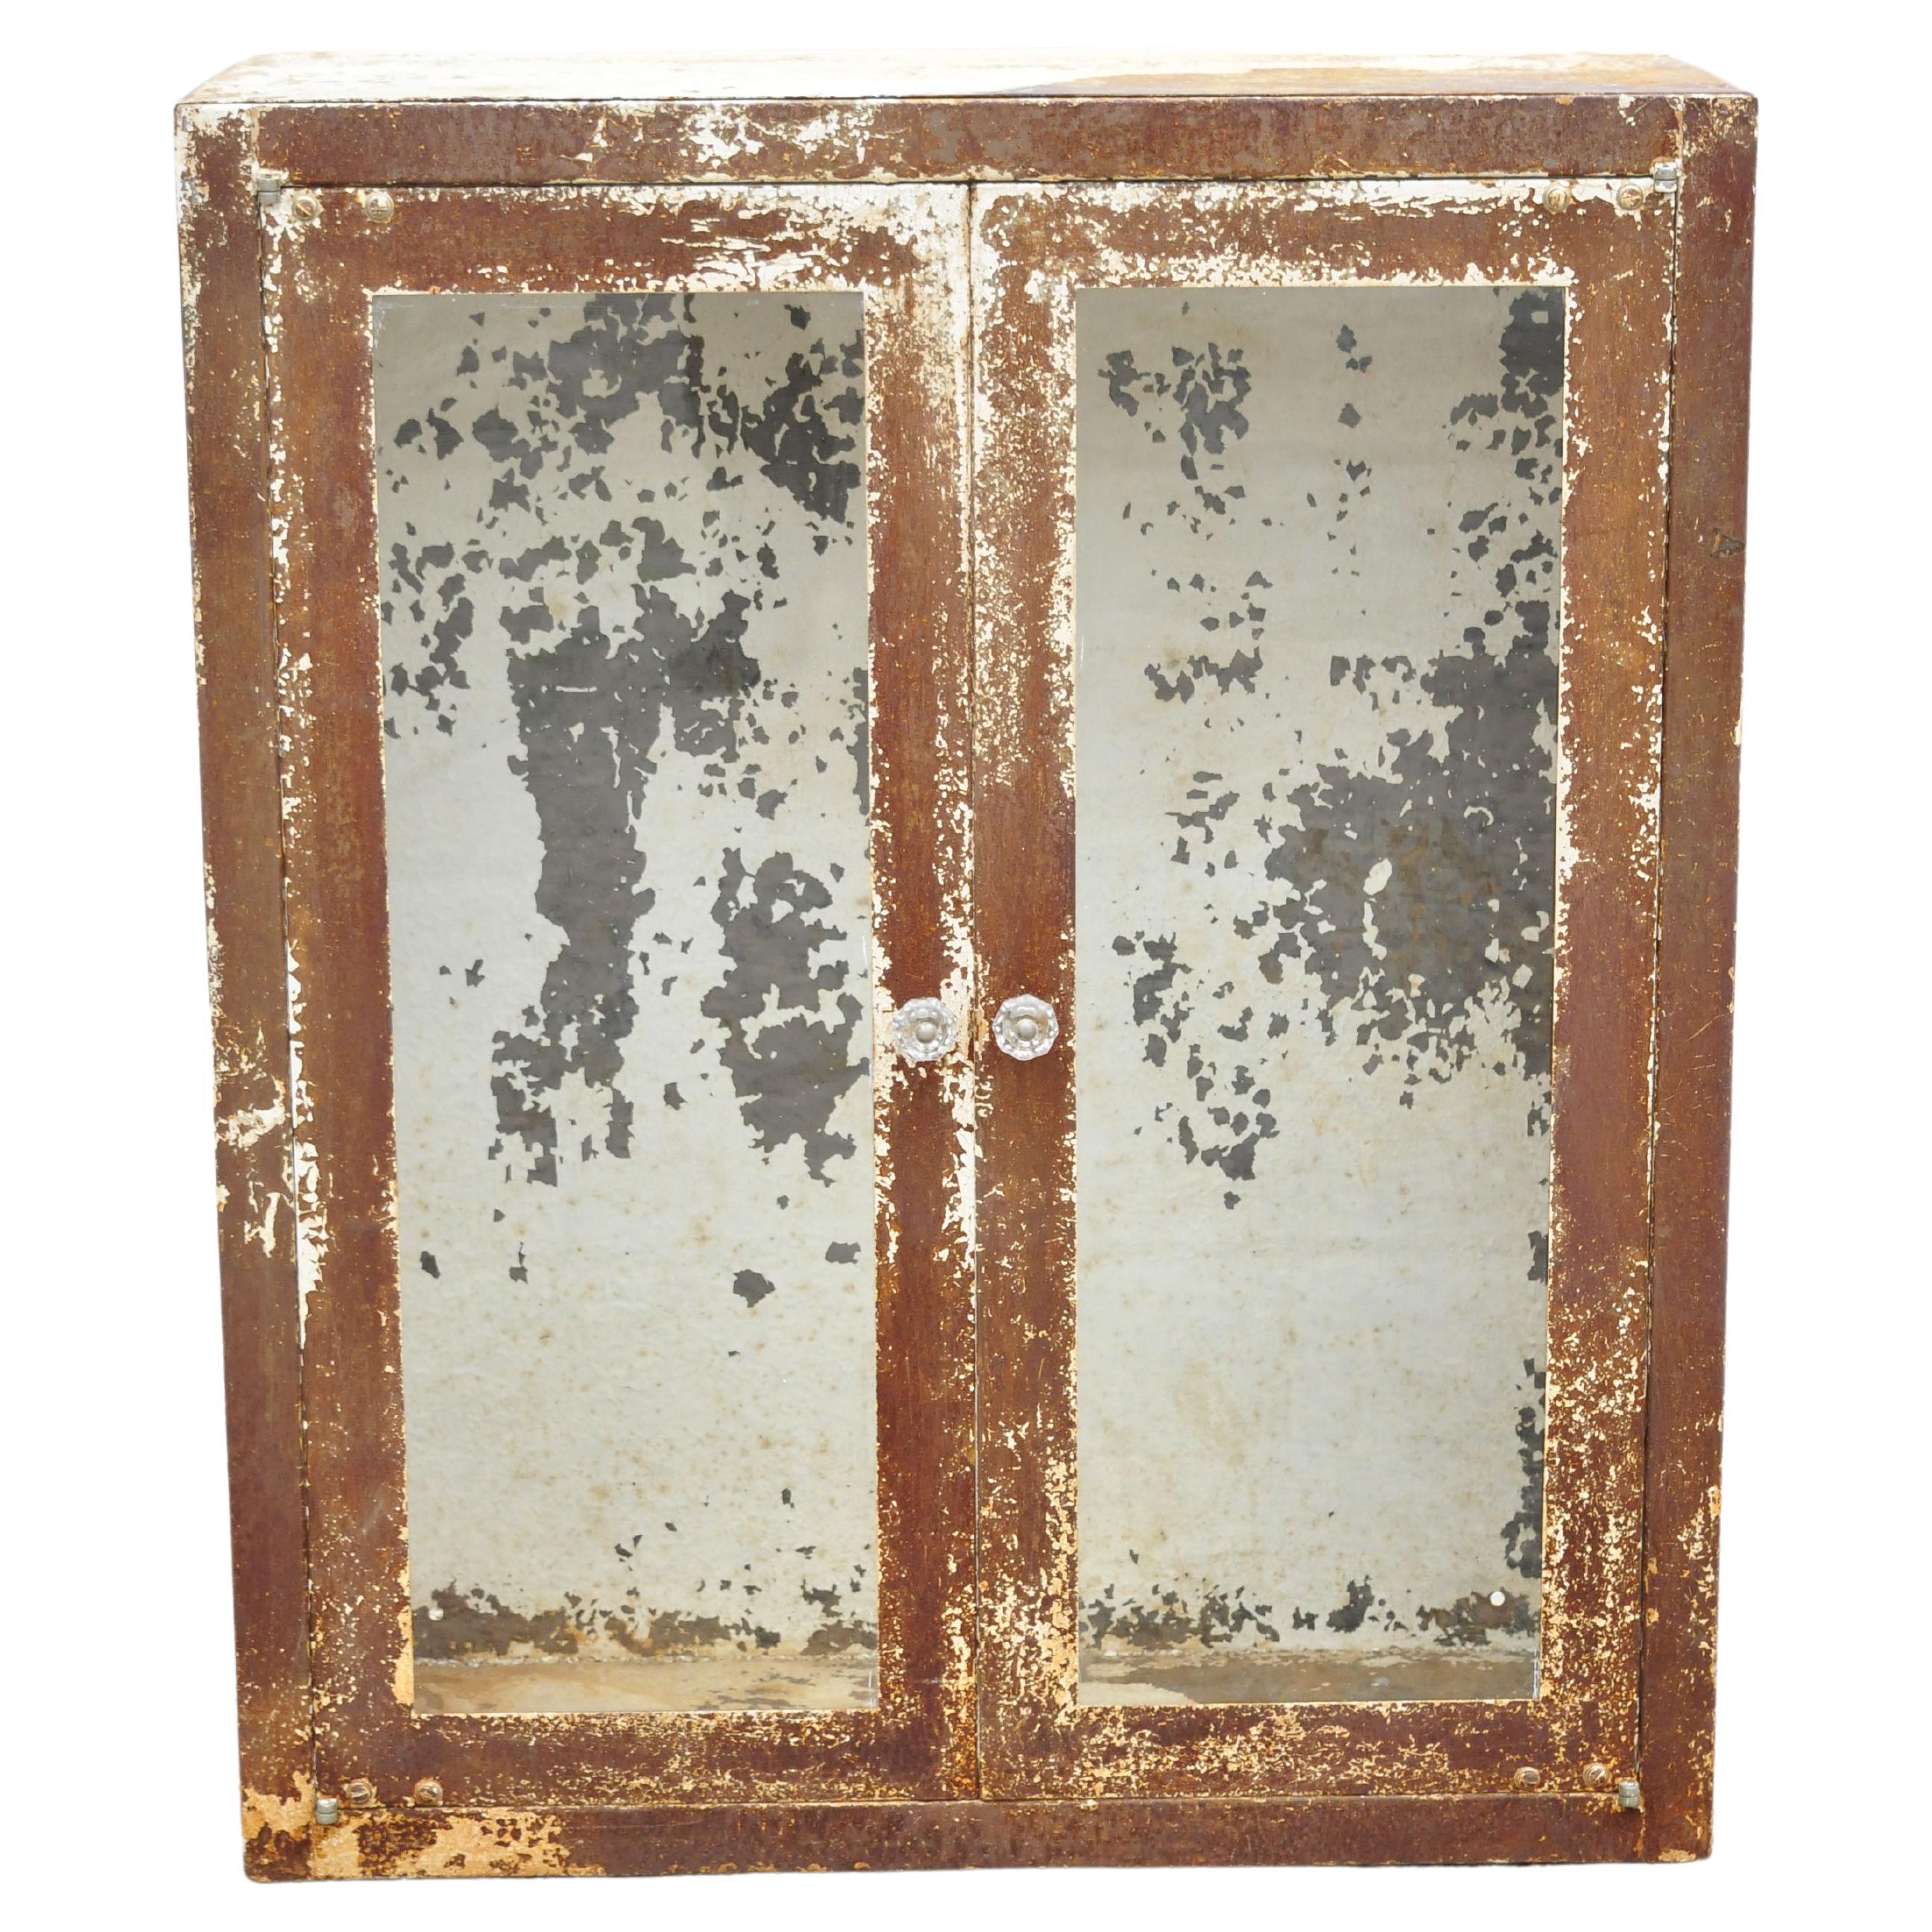 Antique Steel Metal Industrial Medical Dental Display Cabinet with Glass Doors